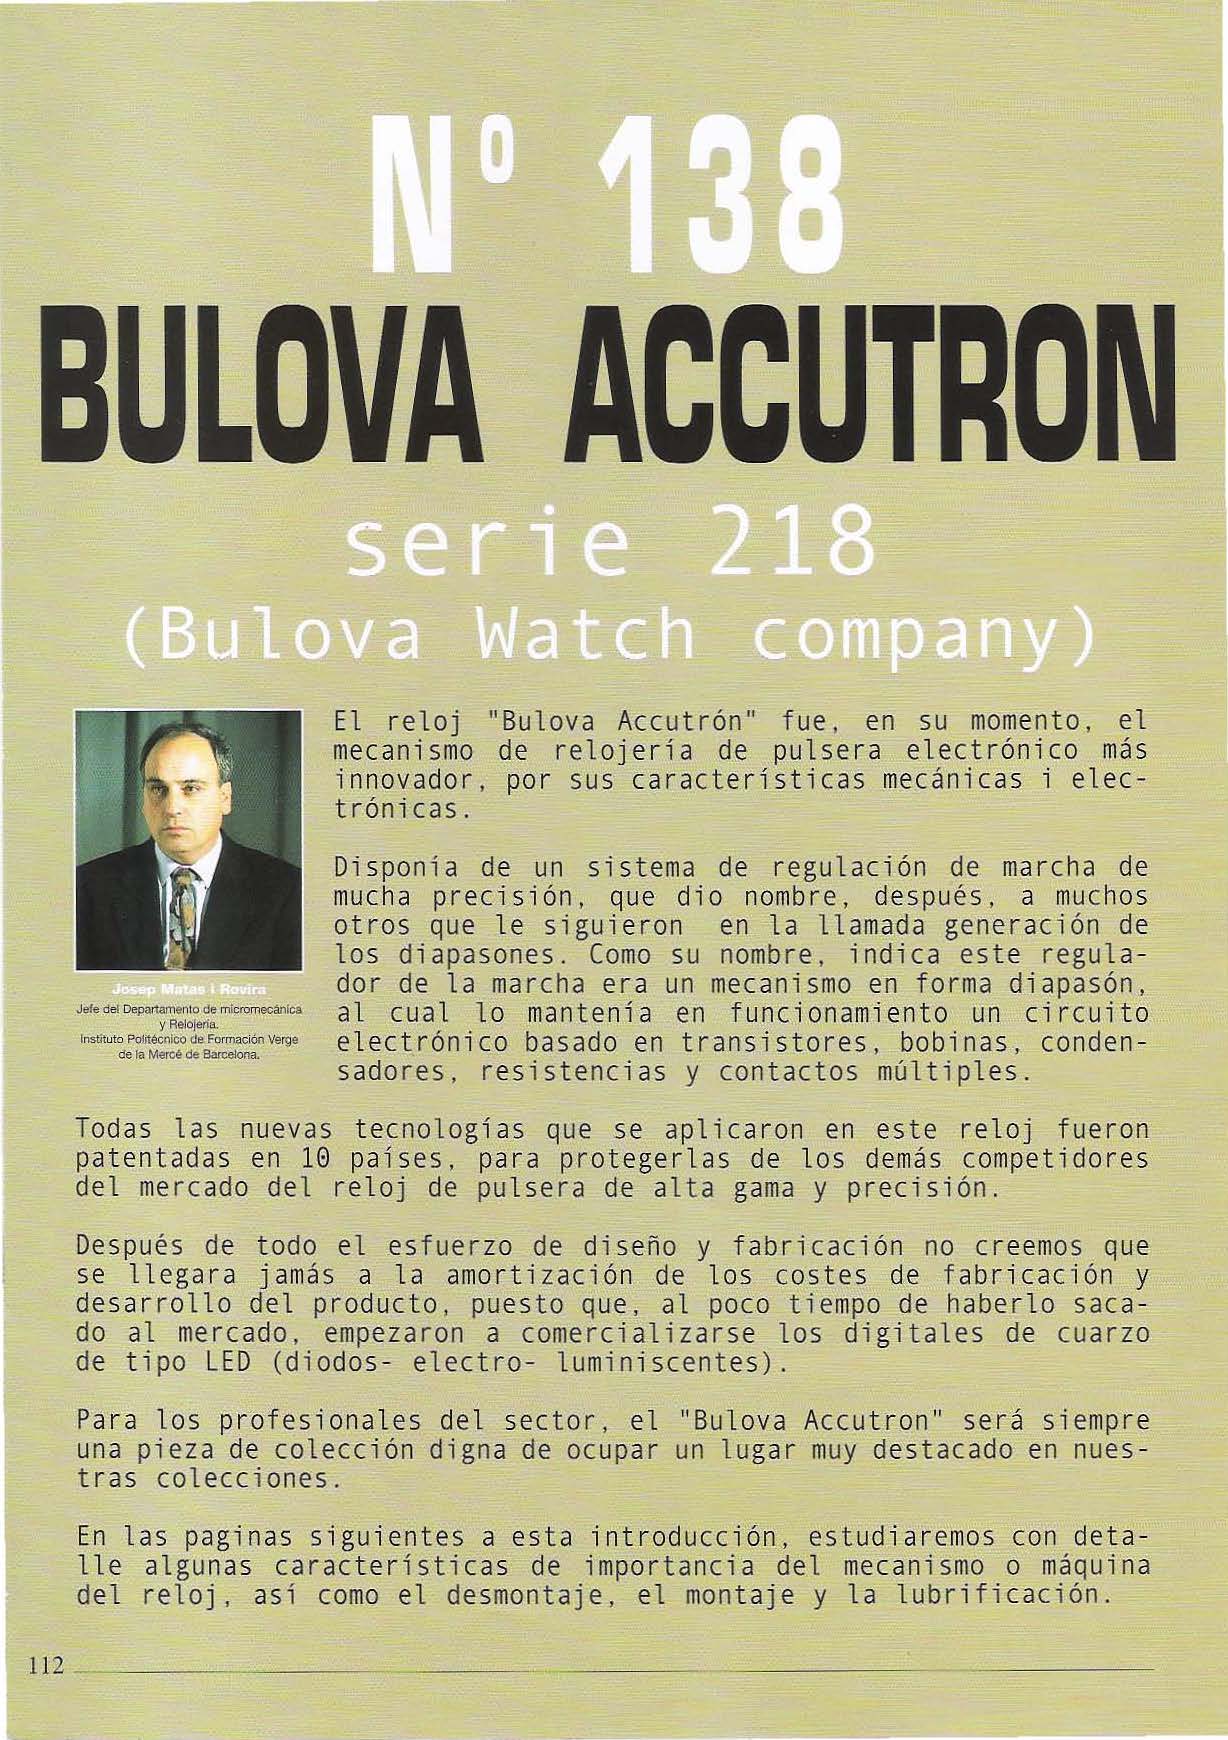 Bulova Accutron serie 218